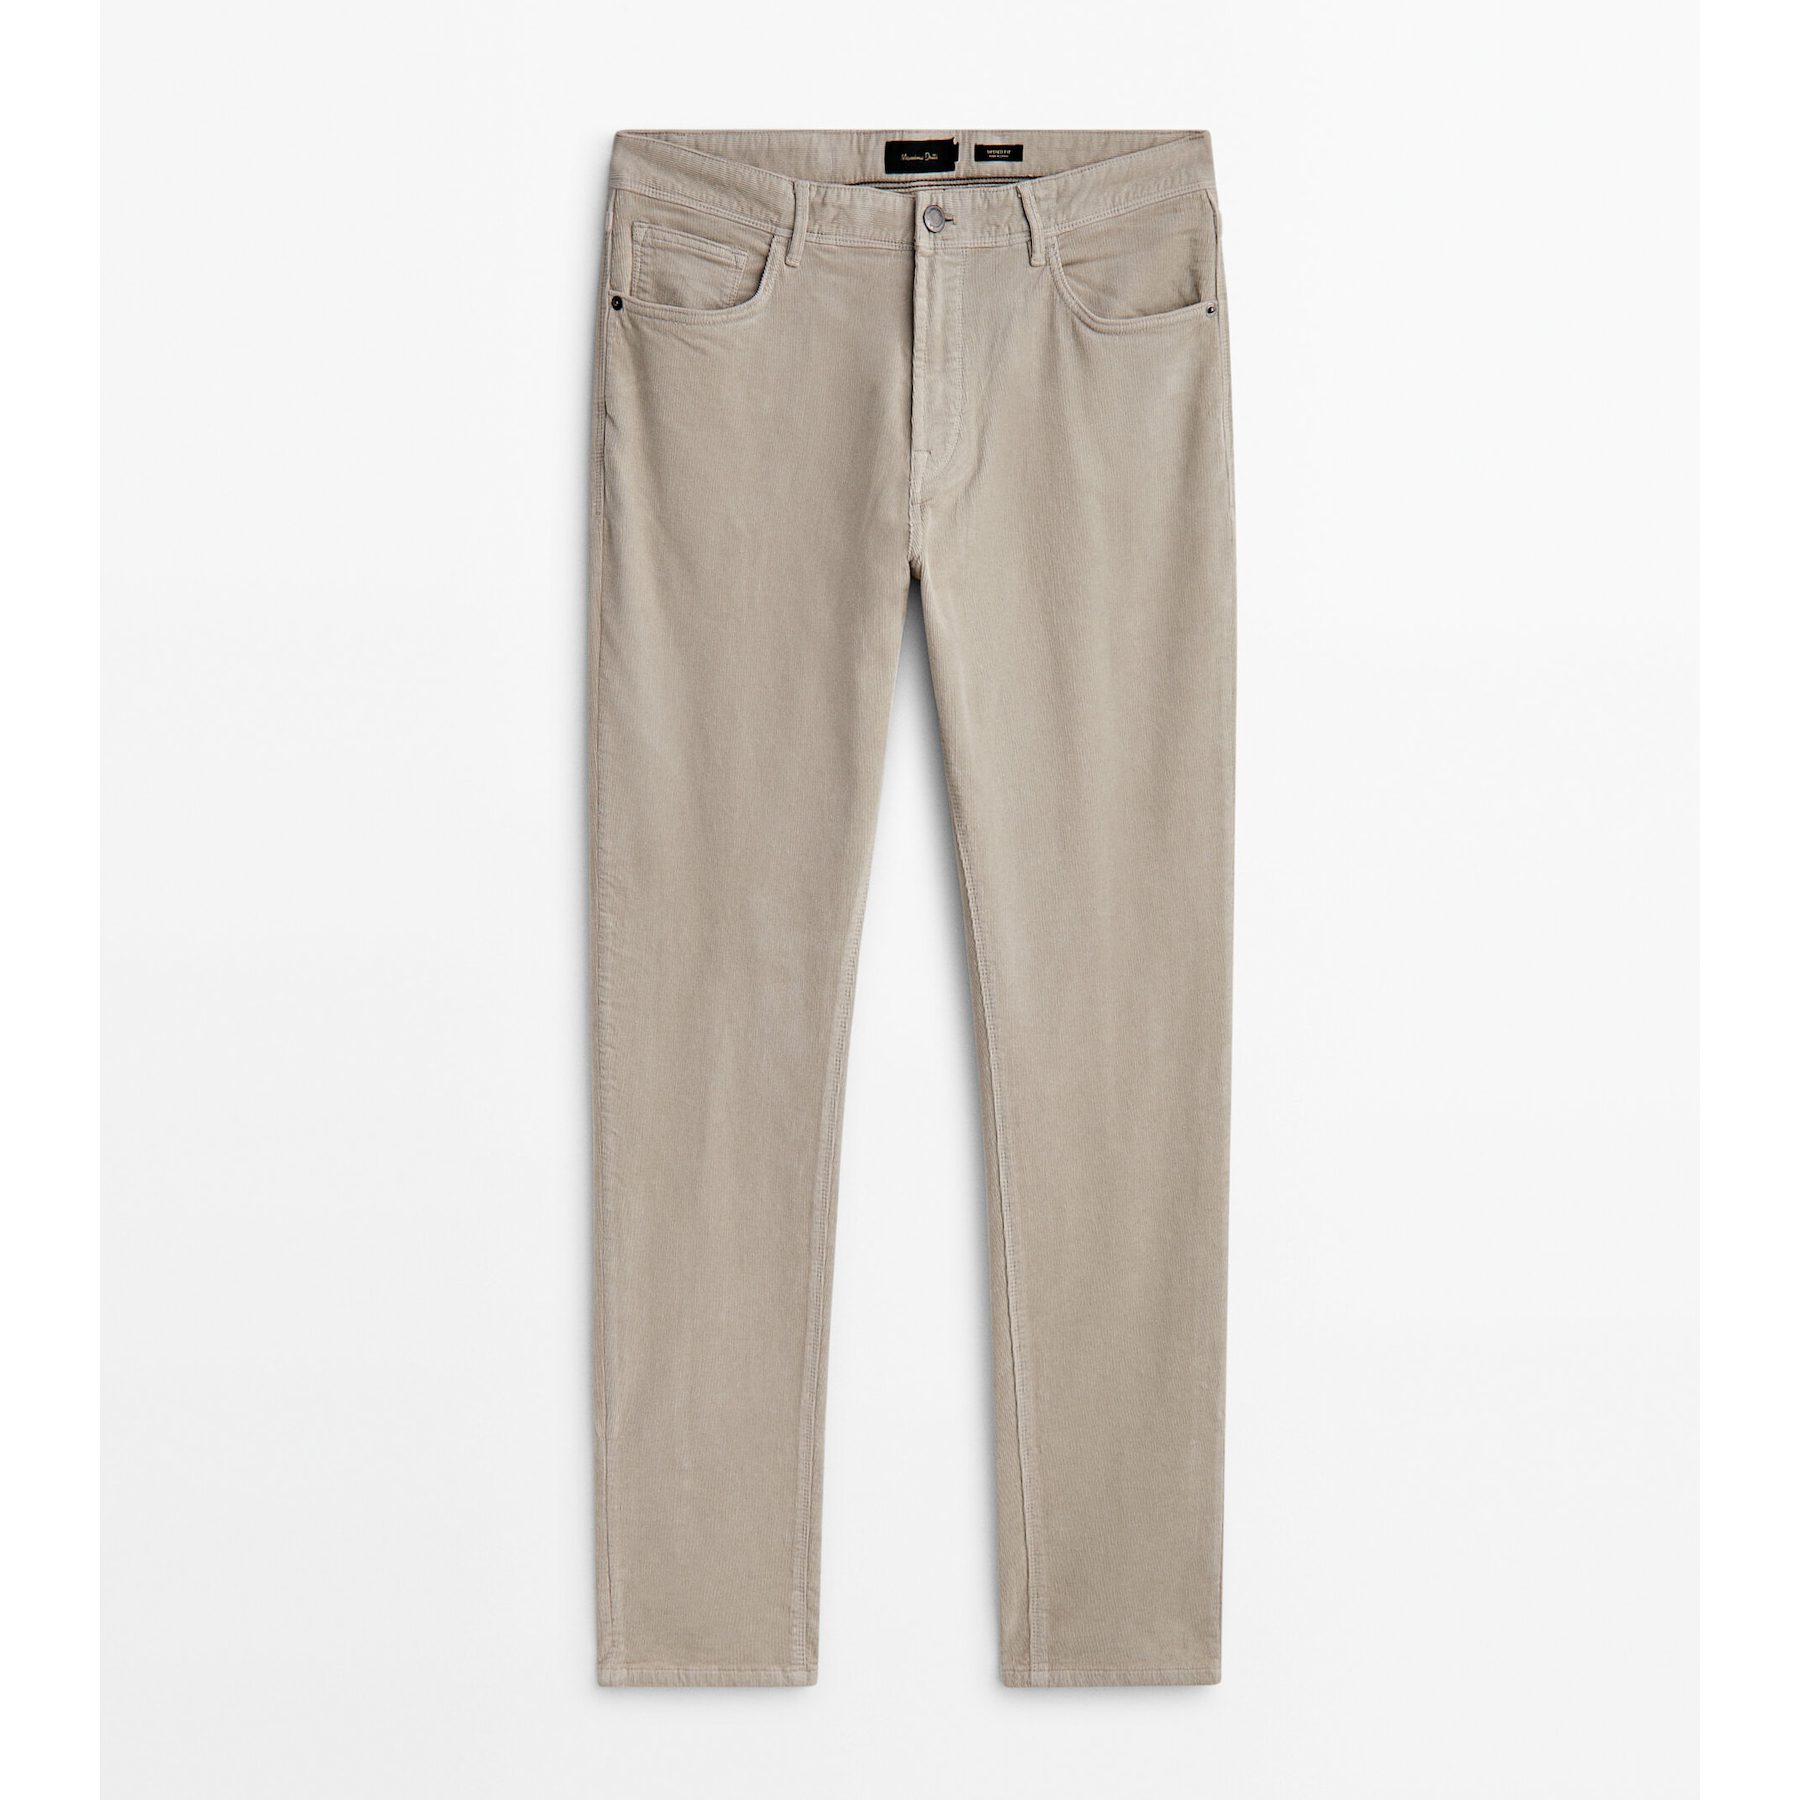 Джинсовые брюки Massimo Dutti Tapered-fit needlecord, кремовый джинсовые брюки massimo dutti tapered fit needlecord хаки